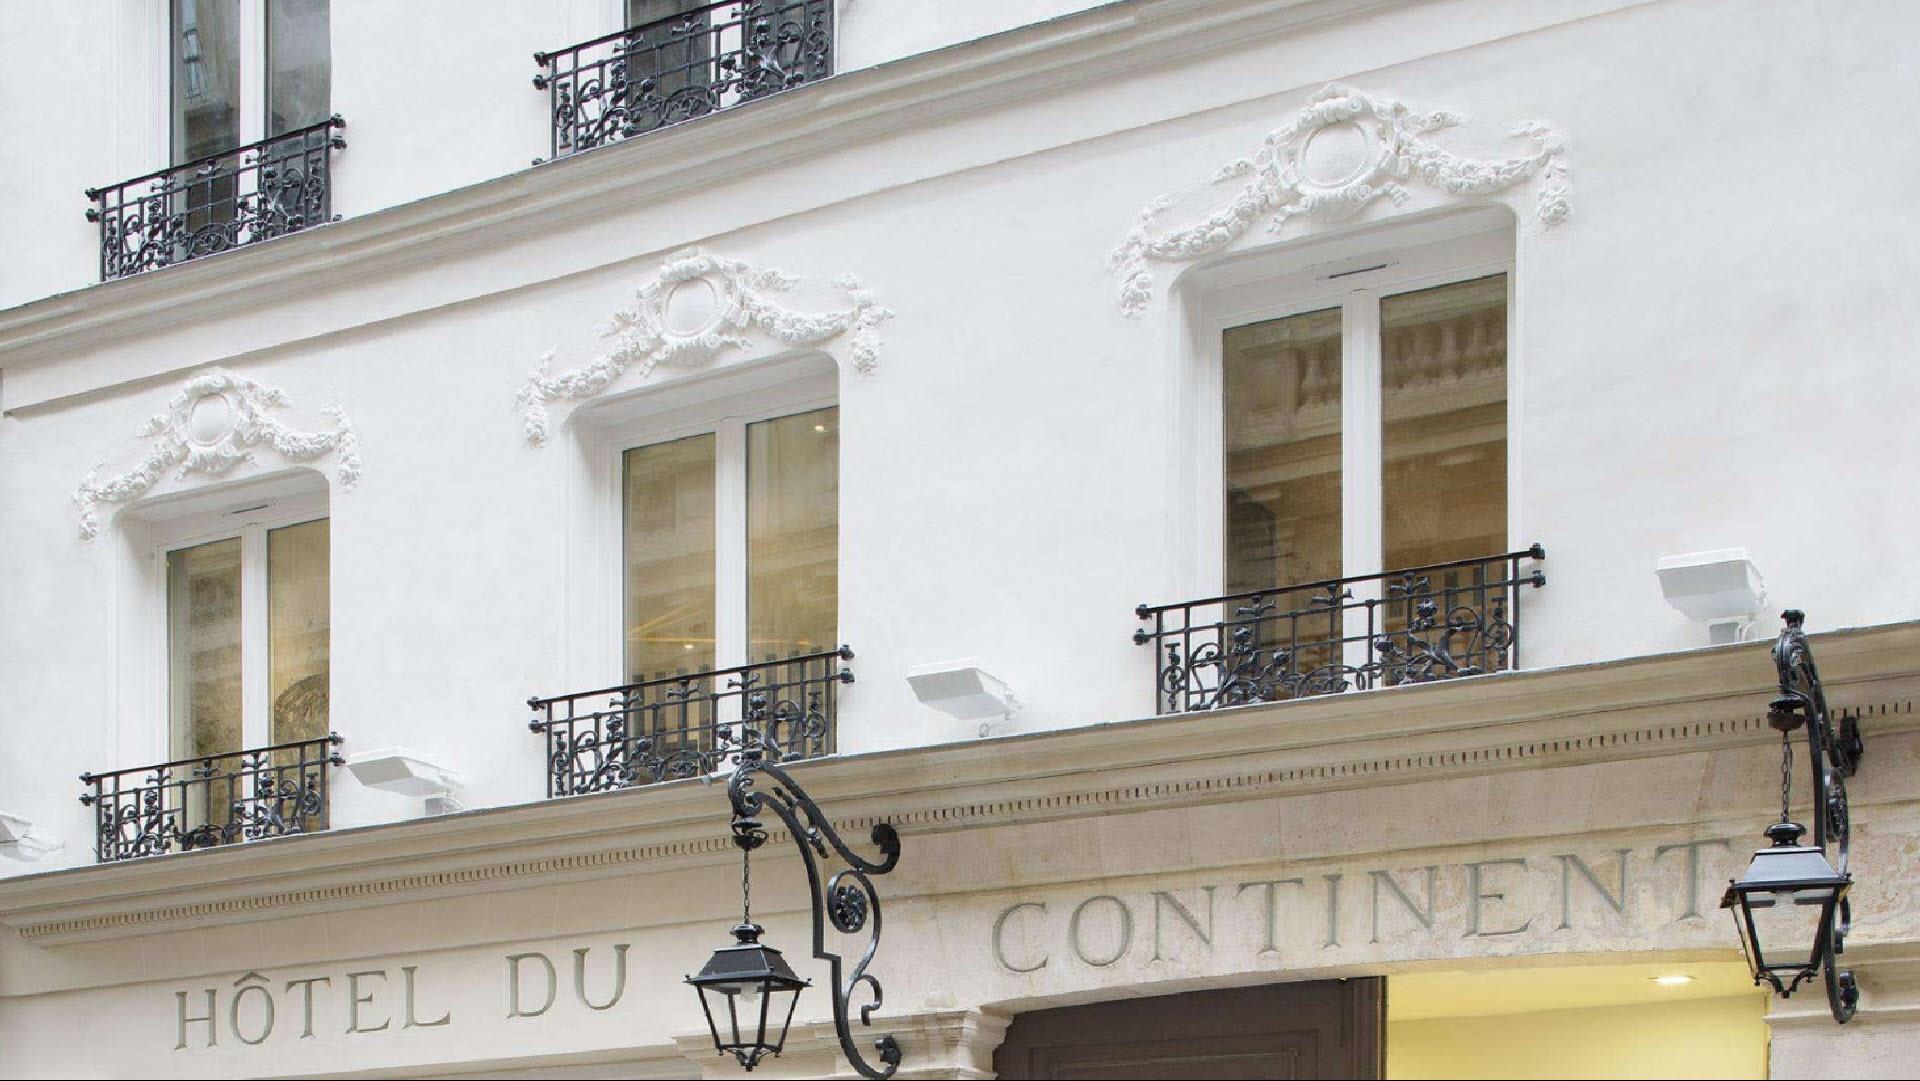 Hotel du Continent in Paris, FR